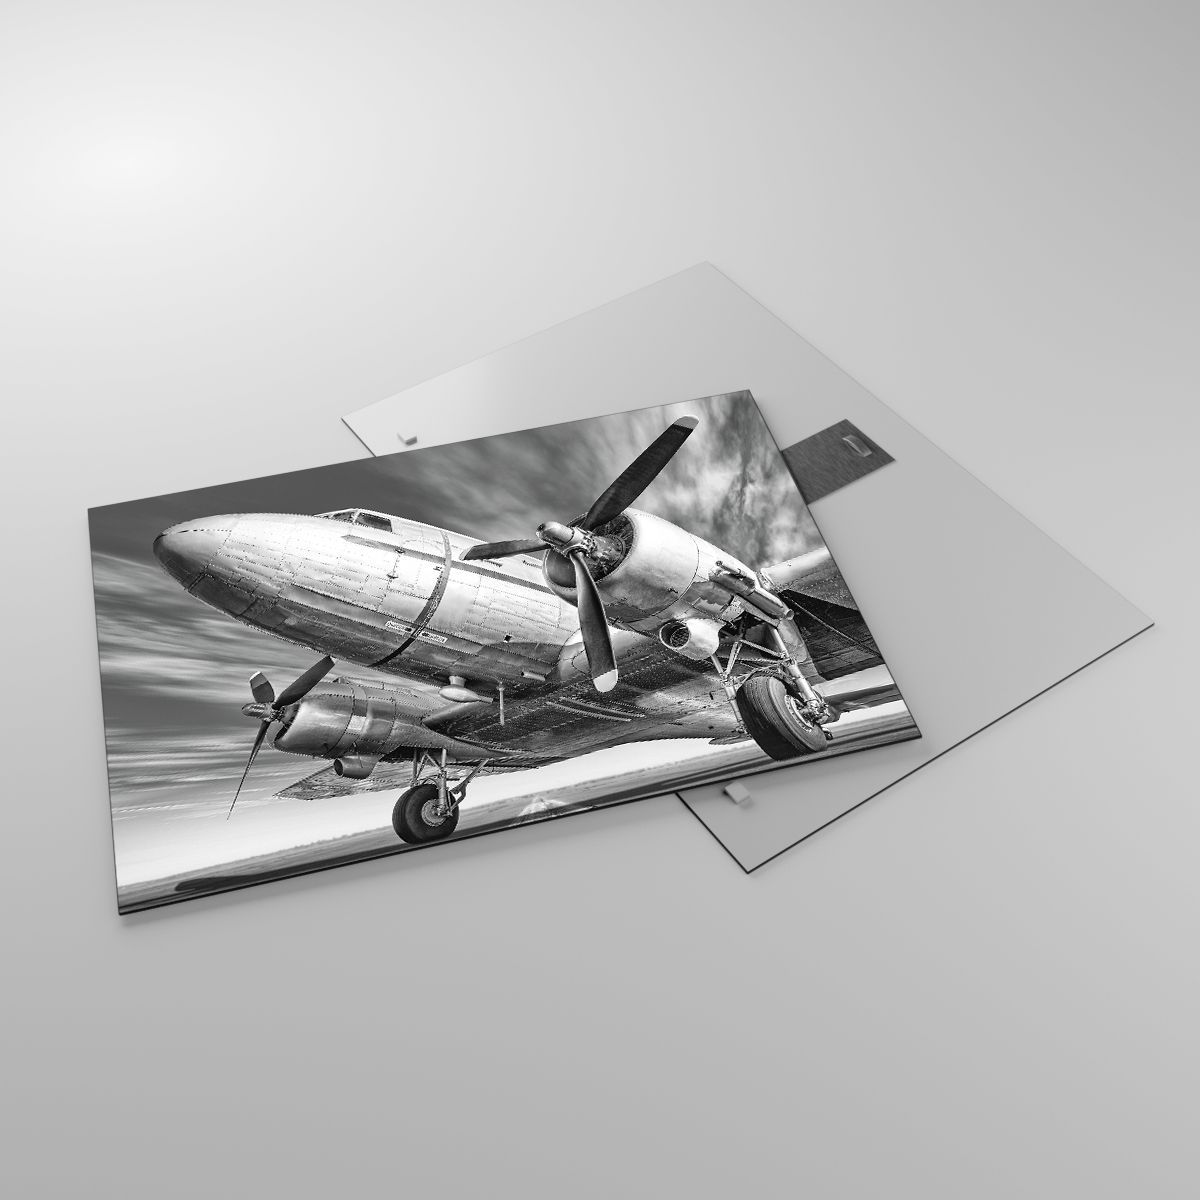 Glasbild Ebene, Glasbild Retro, Glasbild Flugzeug, Glasbild Flughafen, Glasbild Schwarz Und Weiß